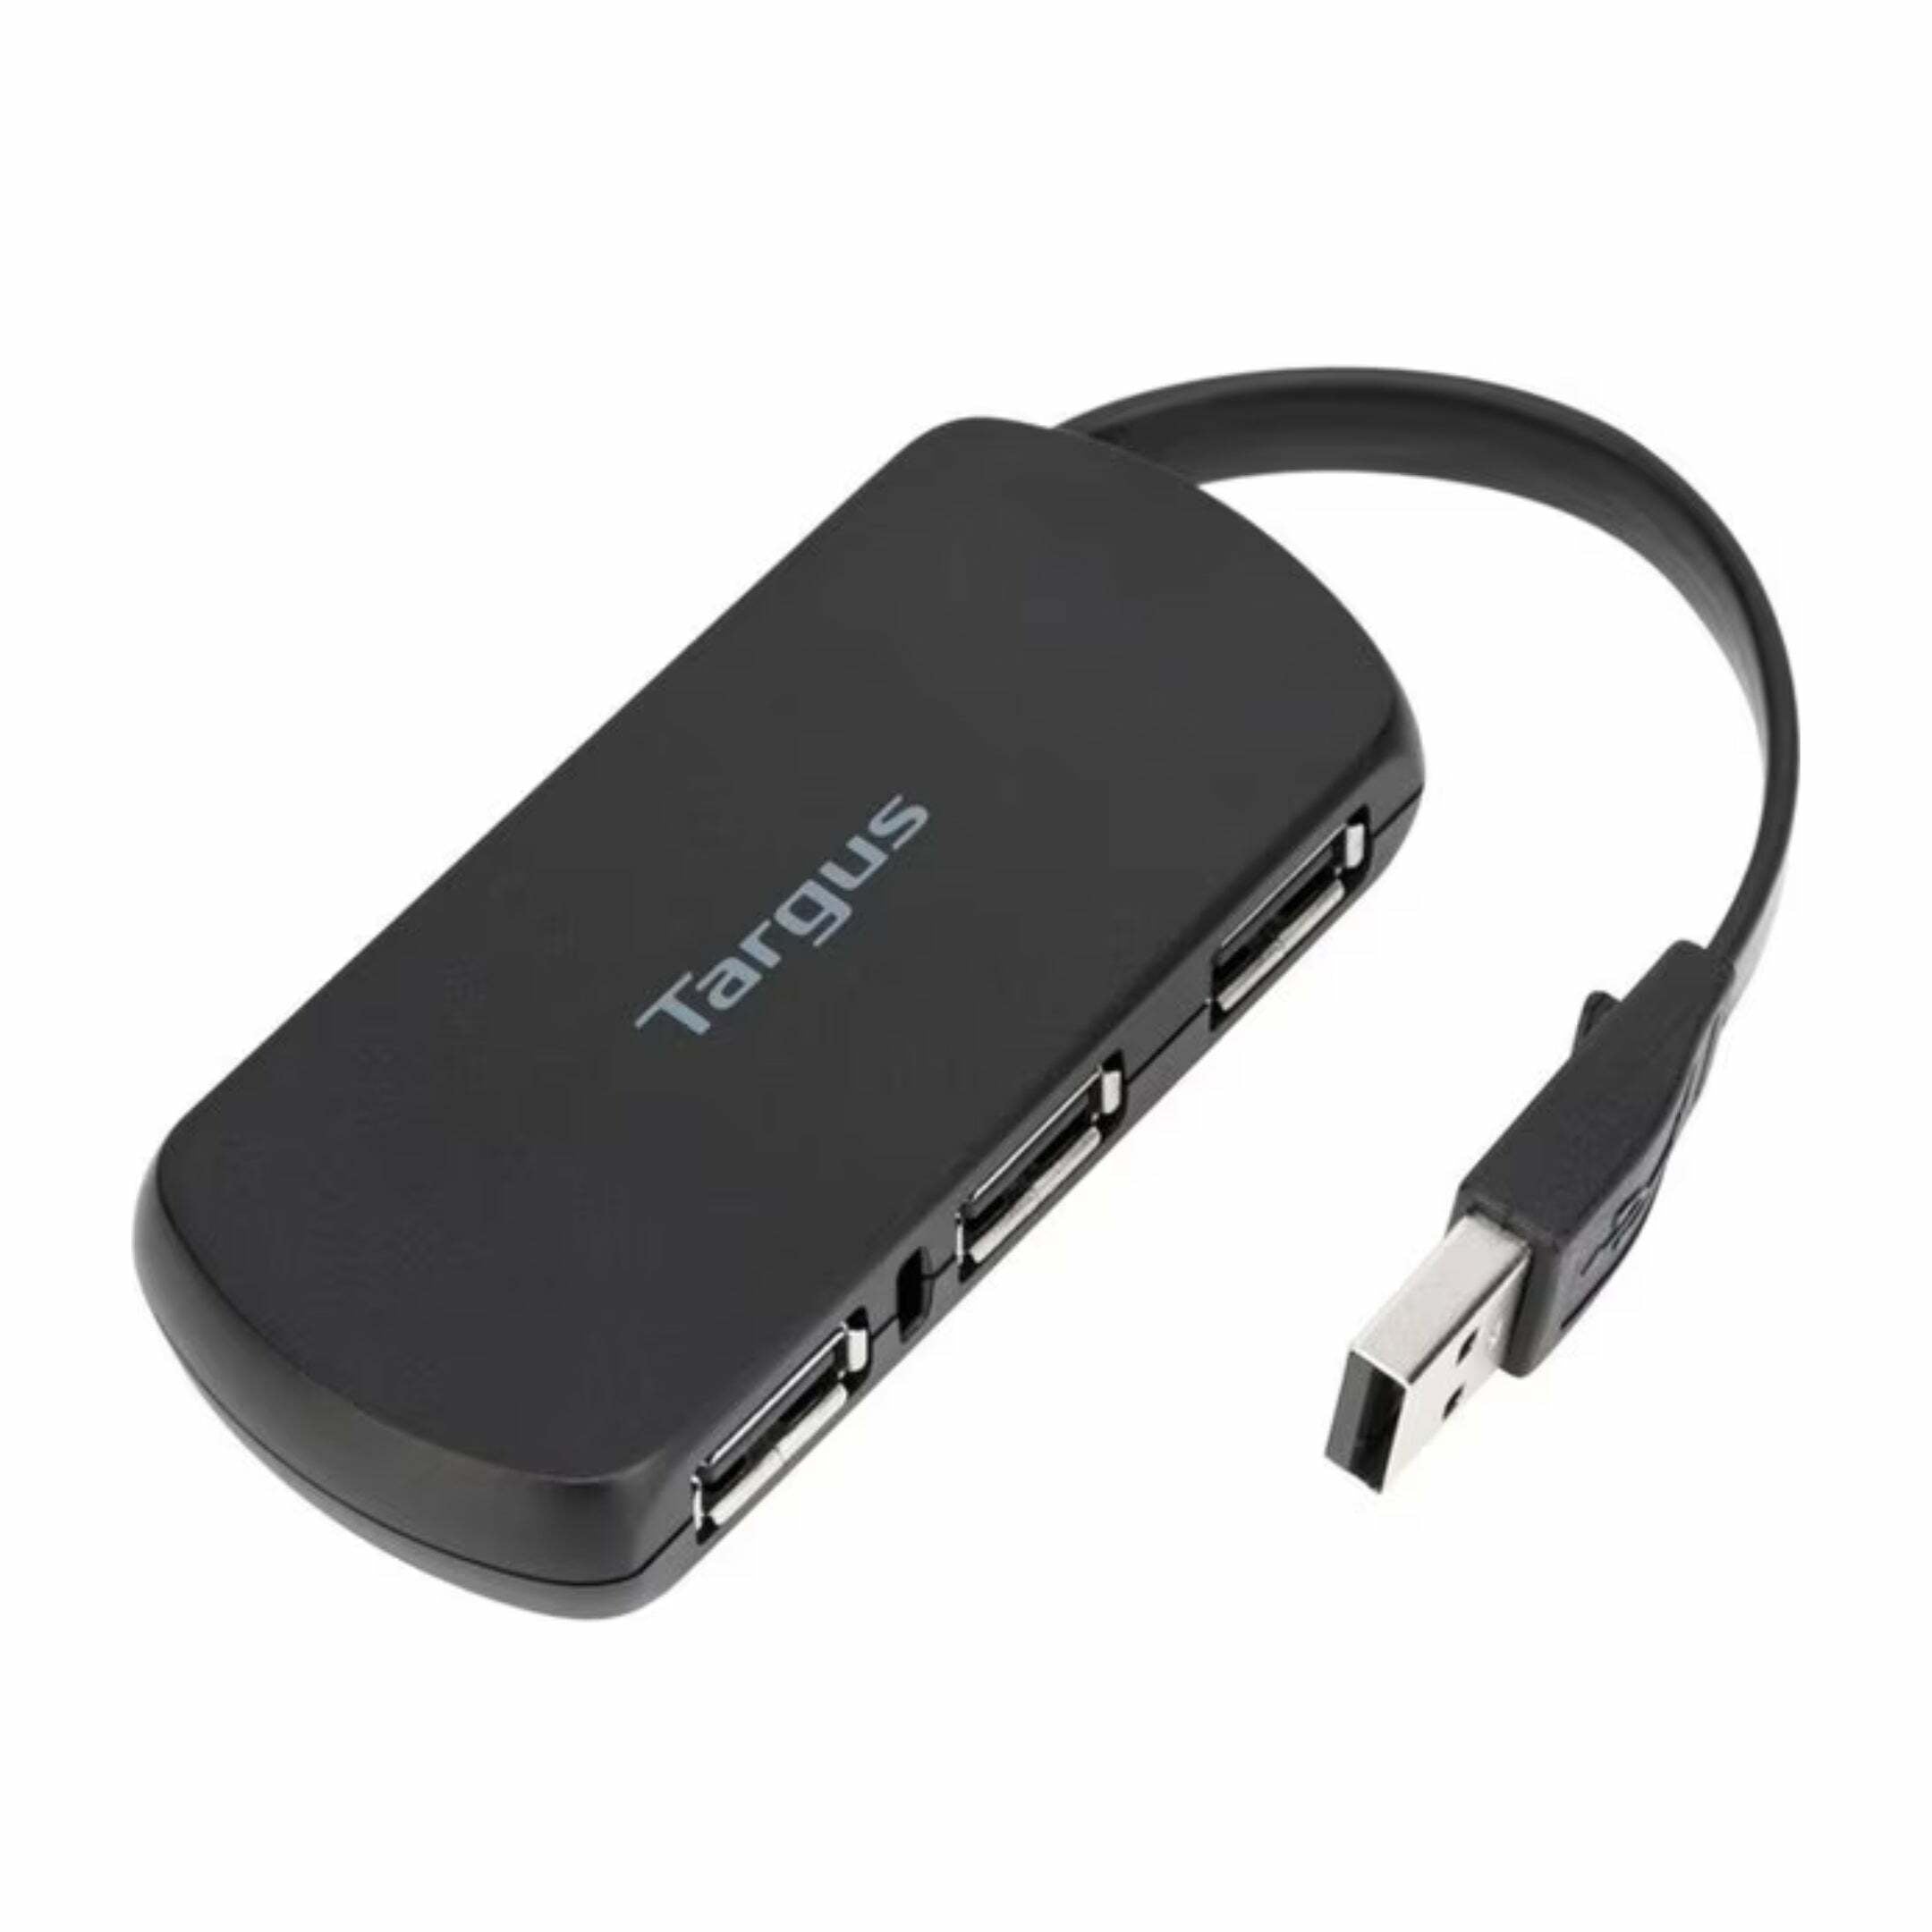 Targus 4-Port USB 2.0 Hub - Sleek, Travel-Friendly Design, Black